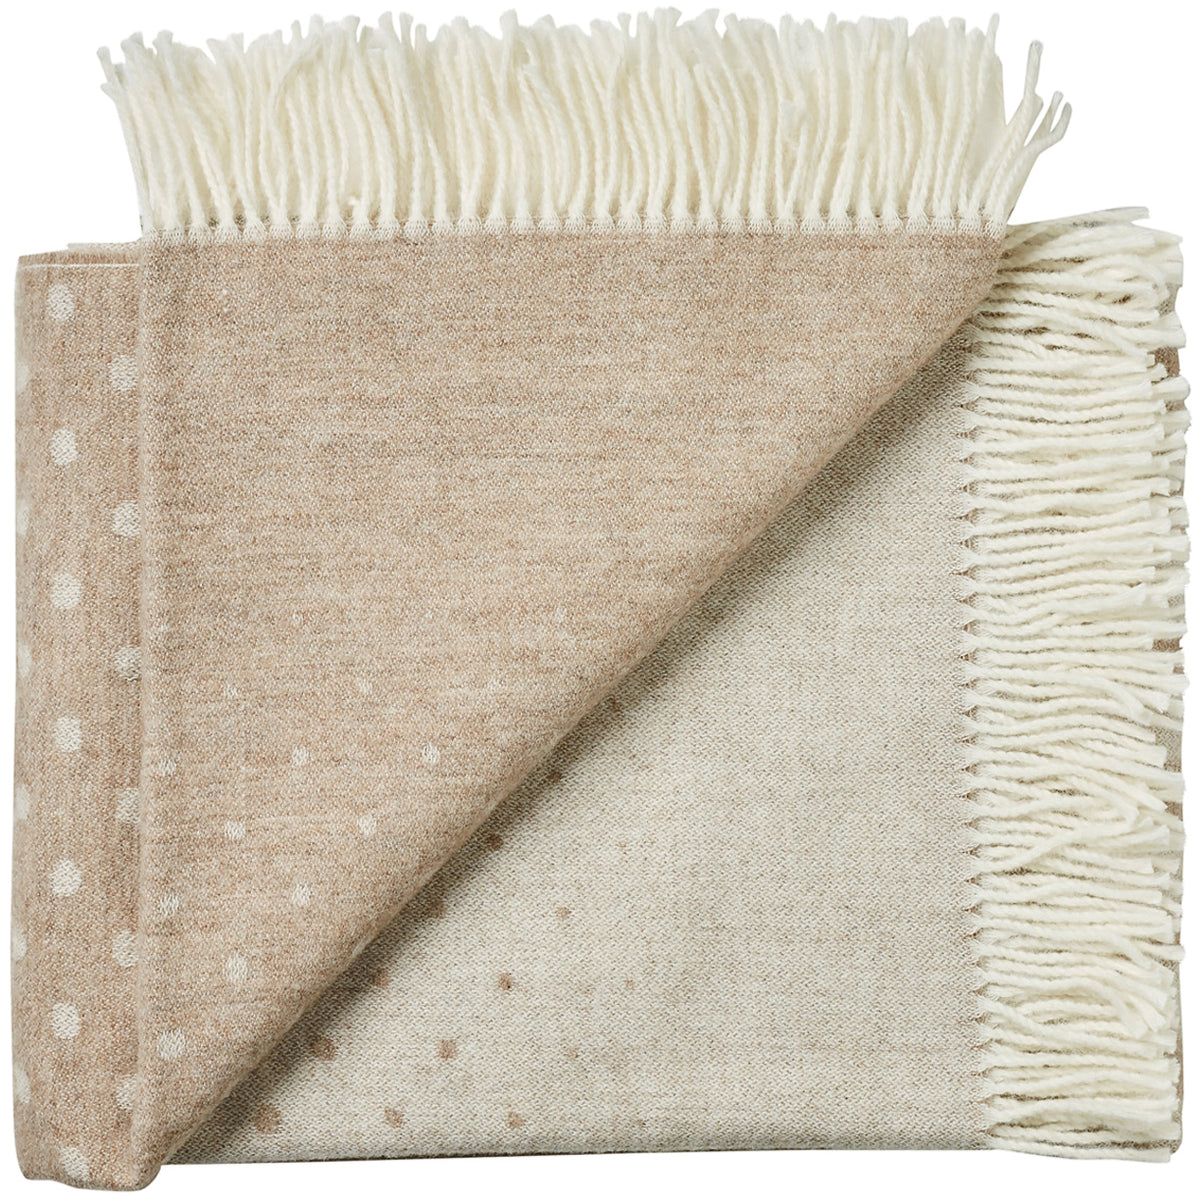 Soft Alpaca Wool Throw Blanket White and Tan Plaid - Woodwaves